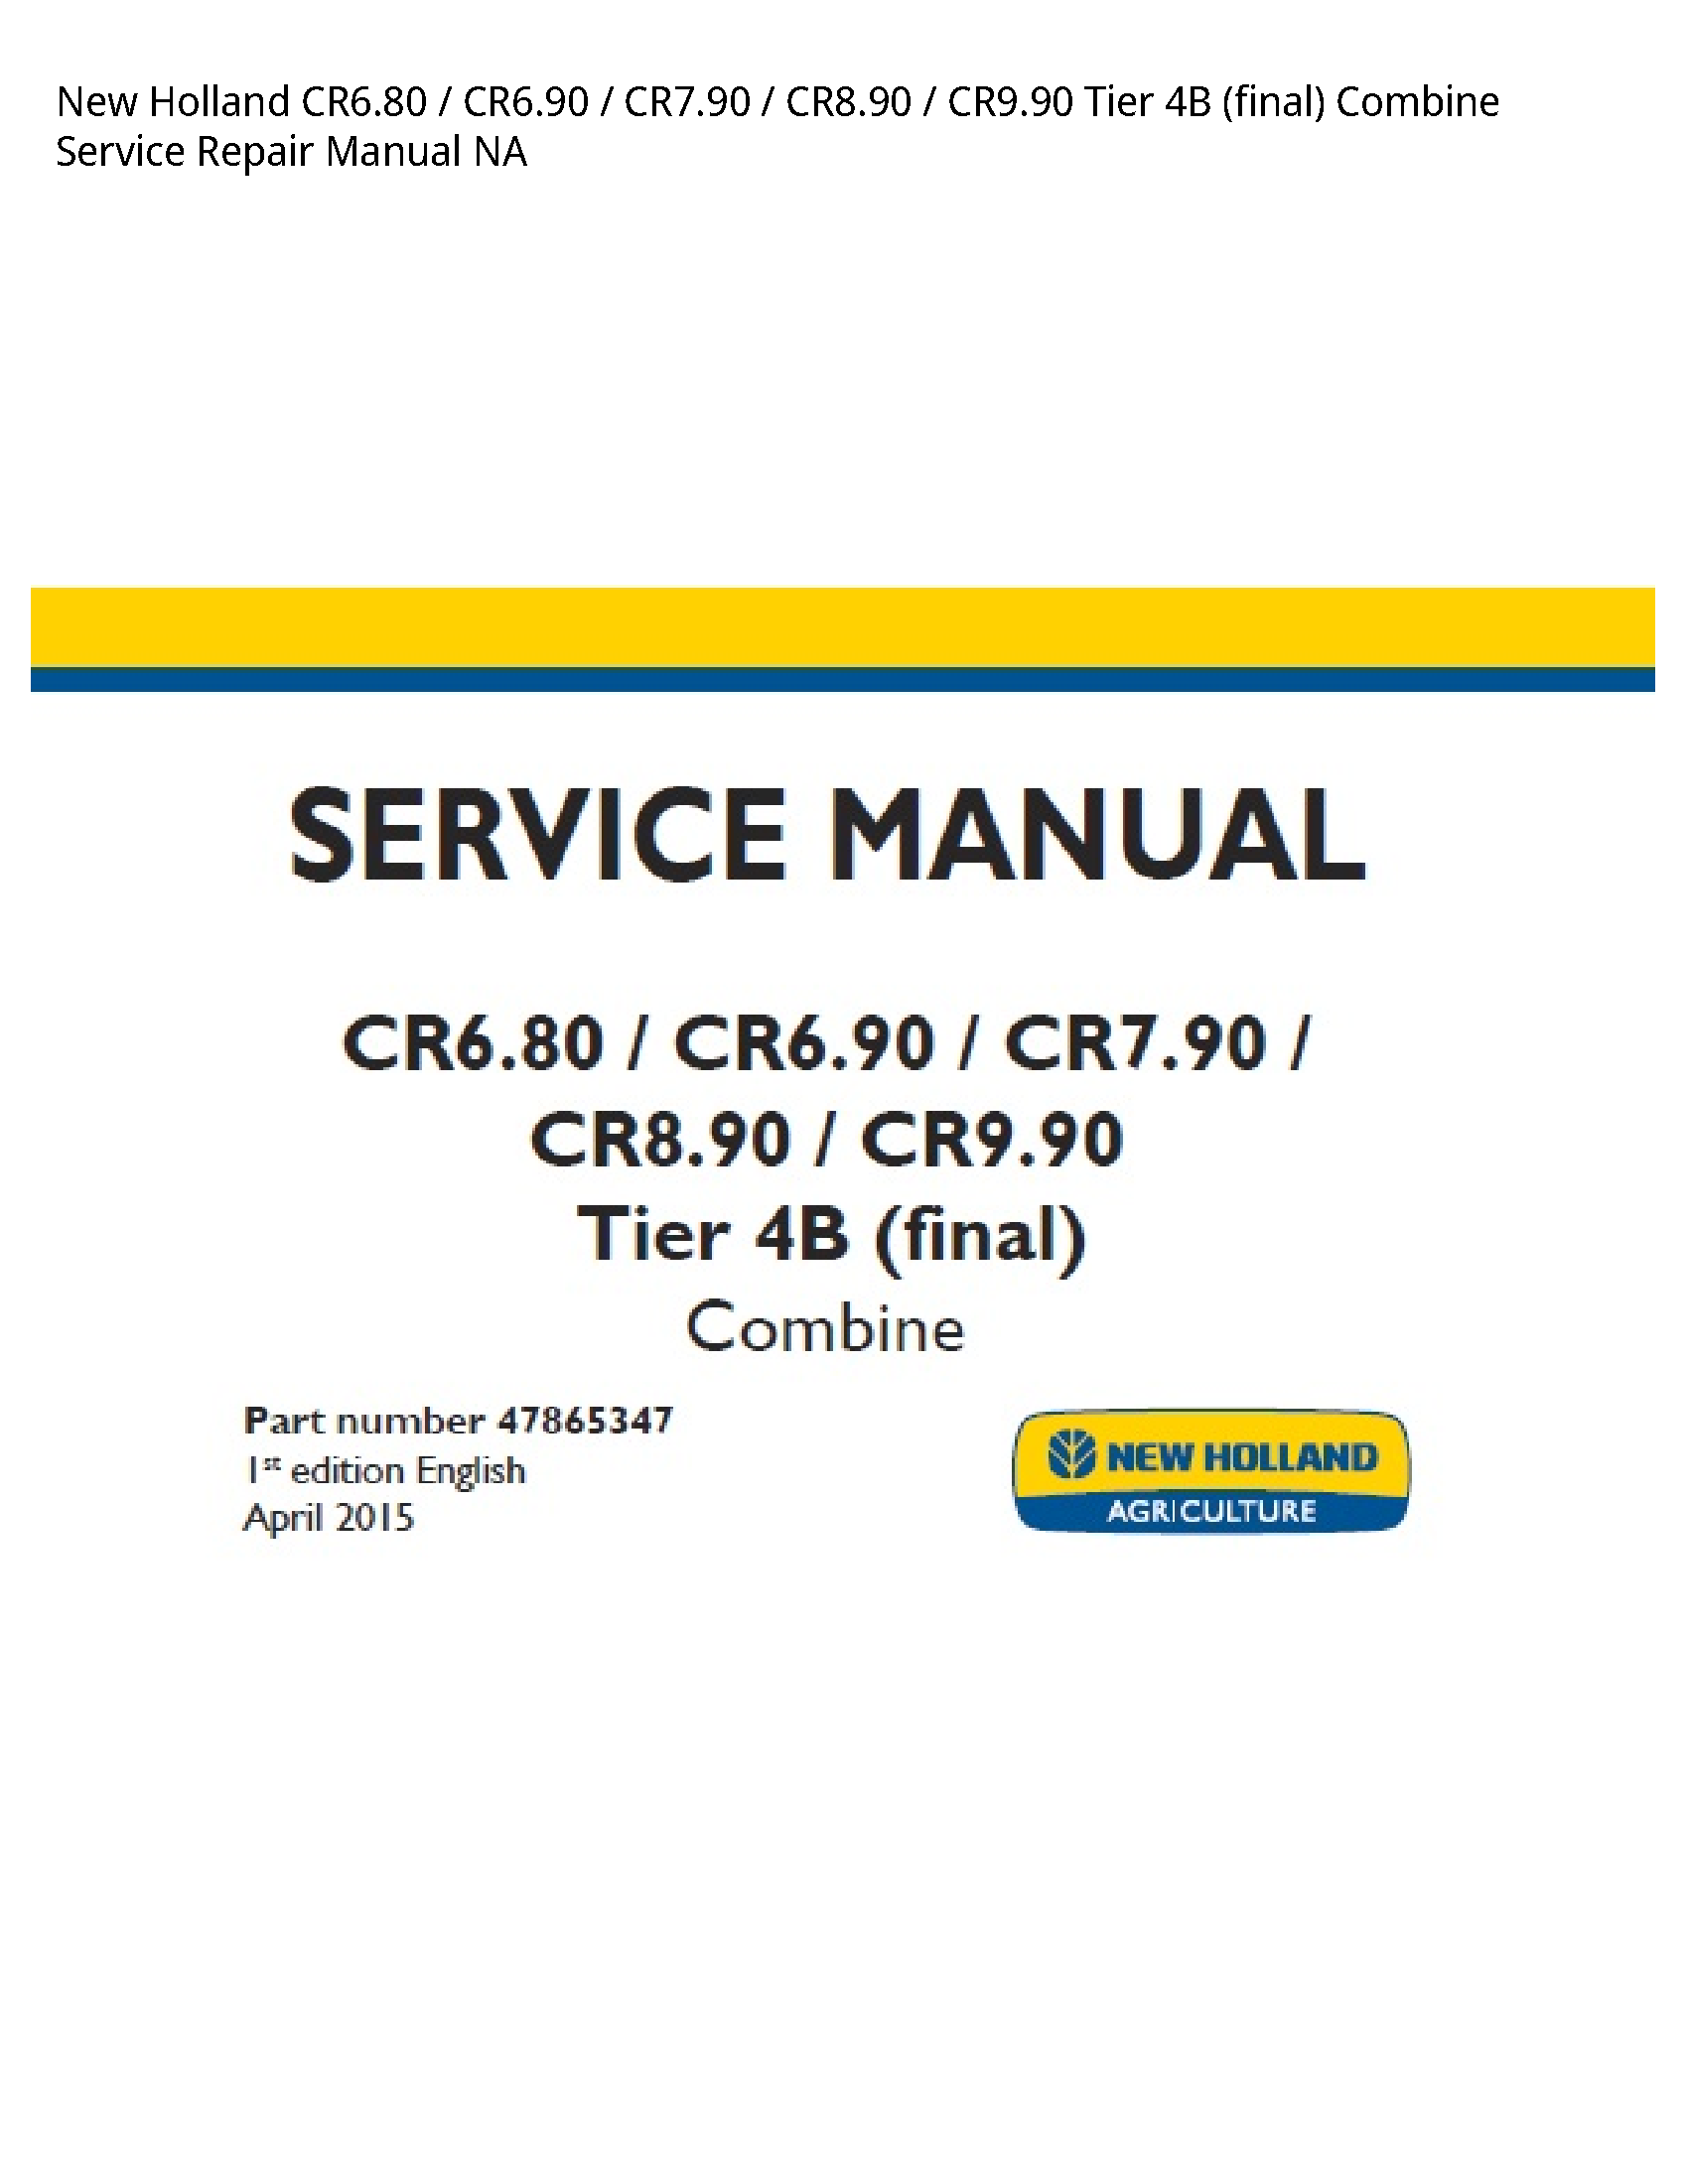 New Holland CR6.80 Tier (final) Combine manual